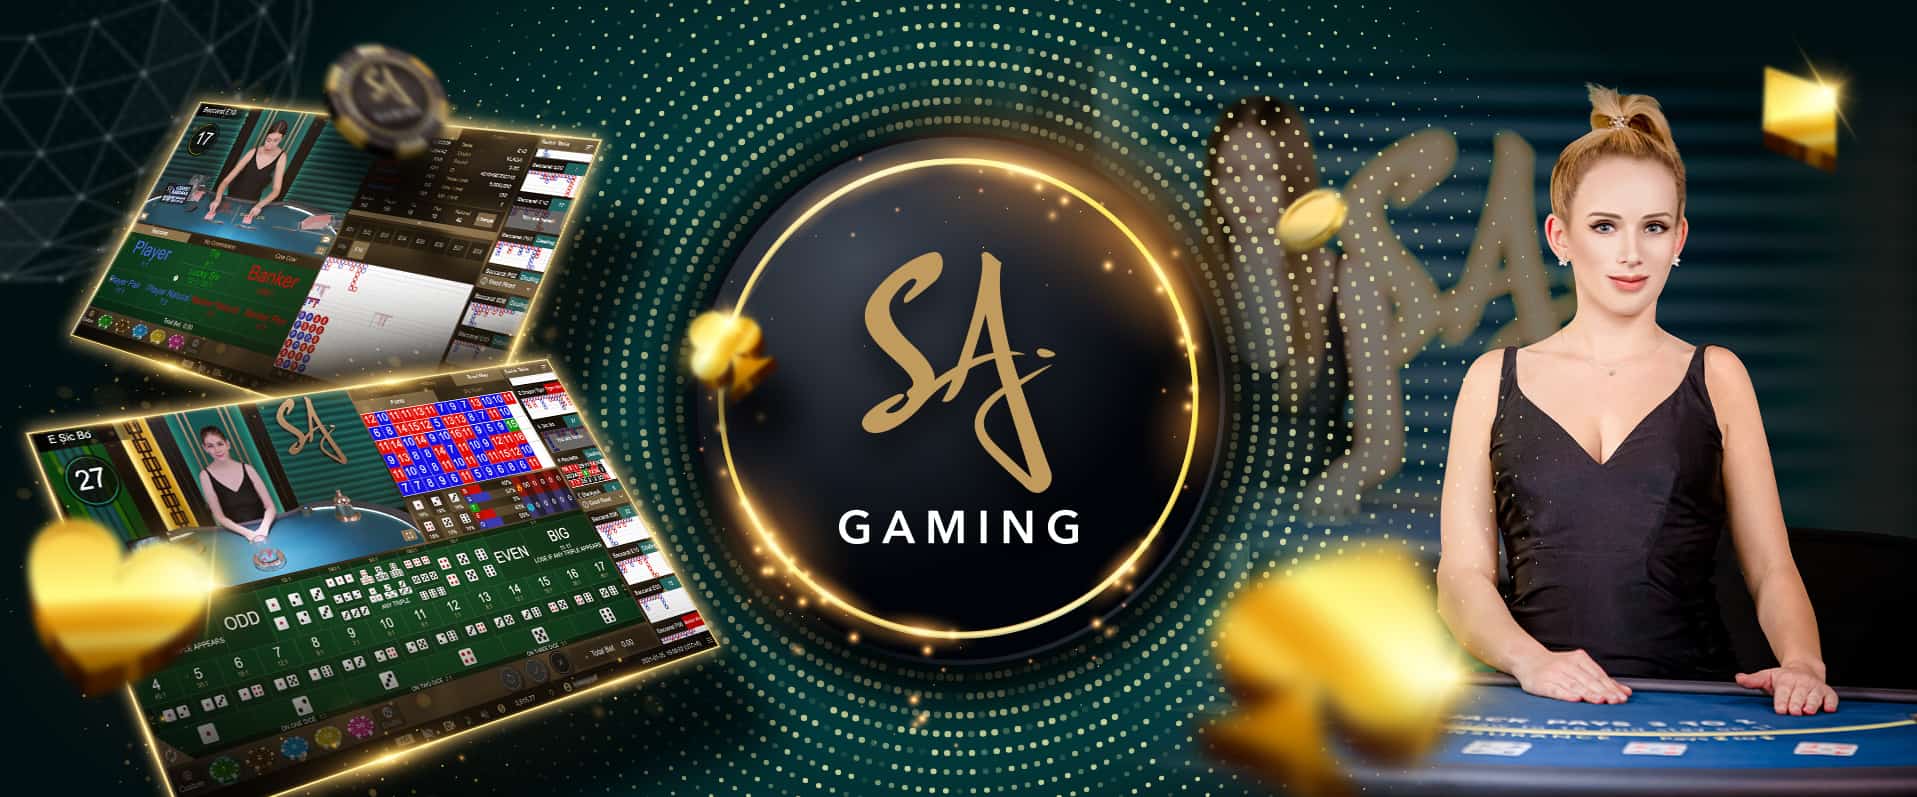 SA Gaming Casino บาคาร่า